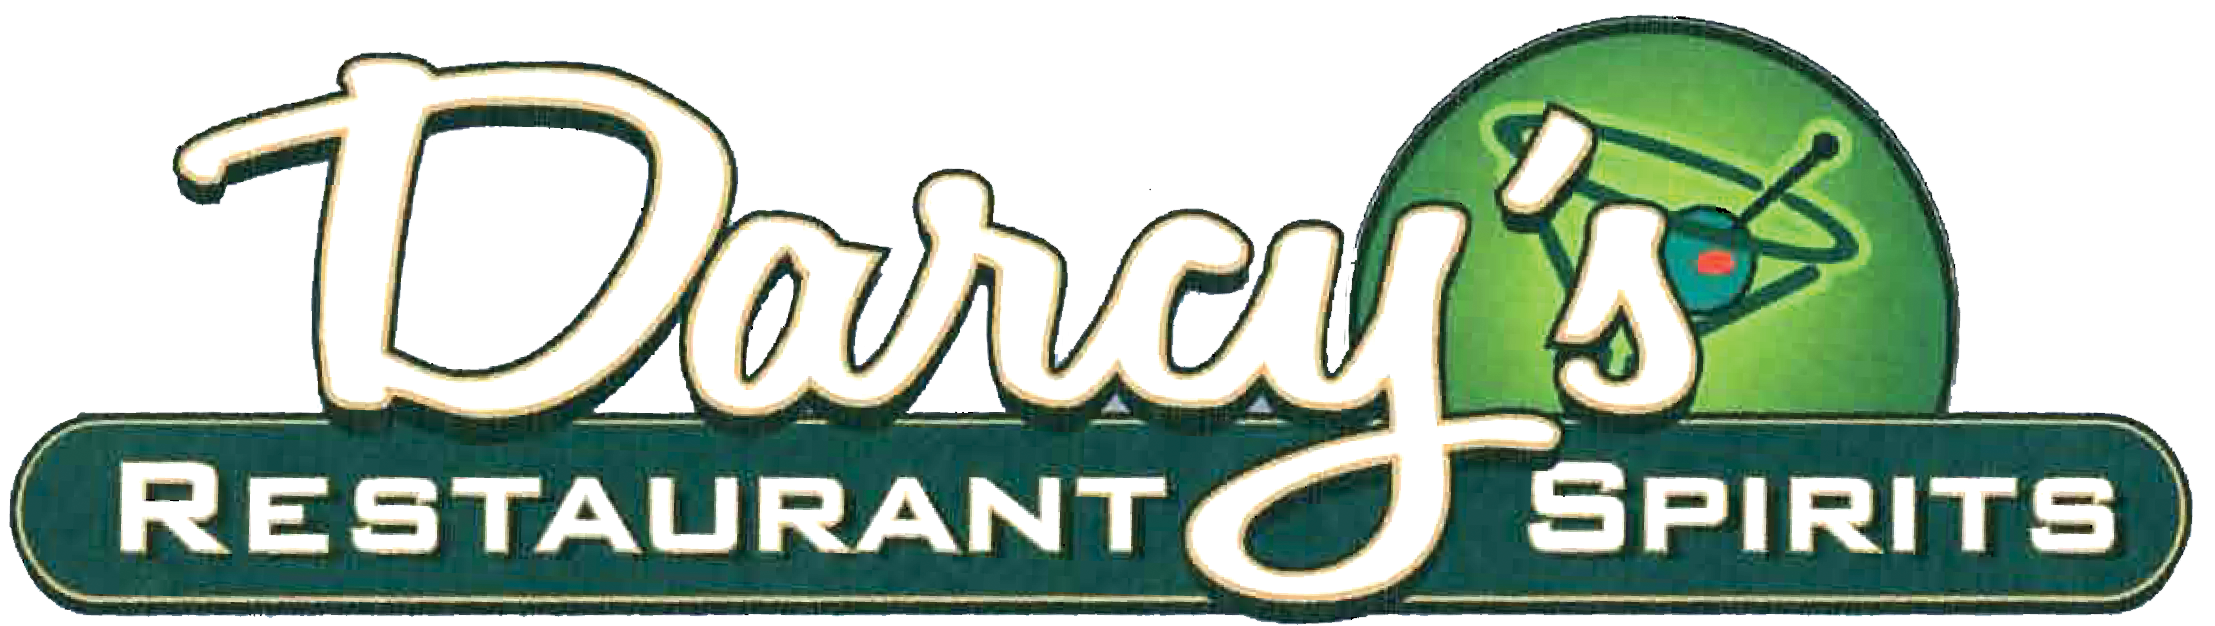 Darcy's Restaurant and Spirits